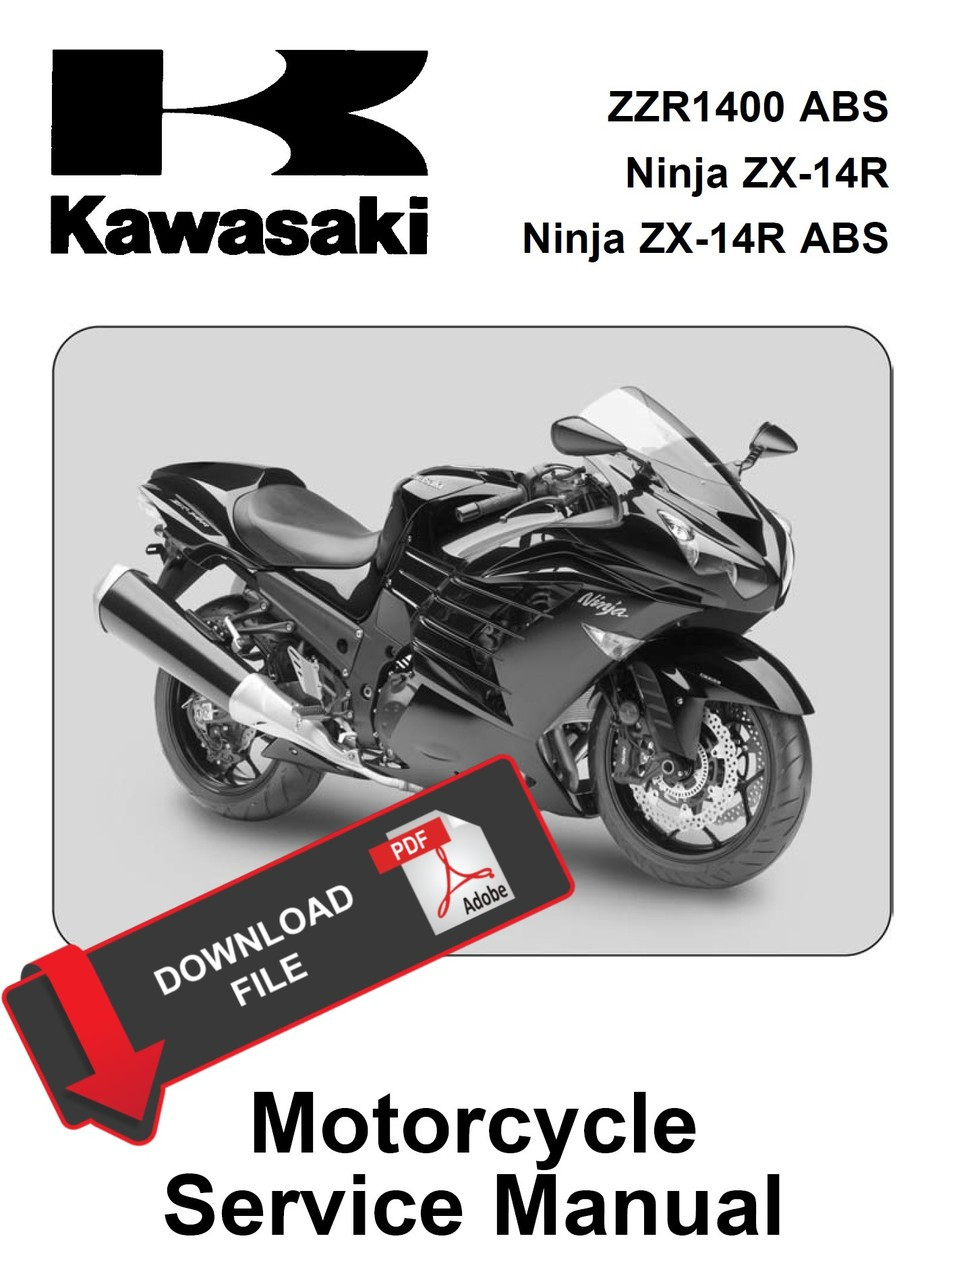 2013 Ninja ZZR1400 ABS Manual